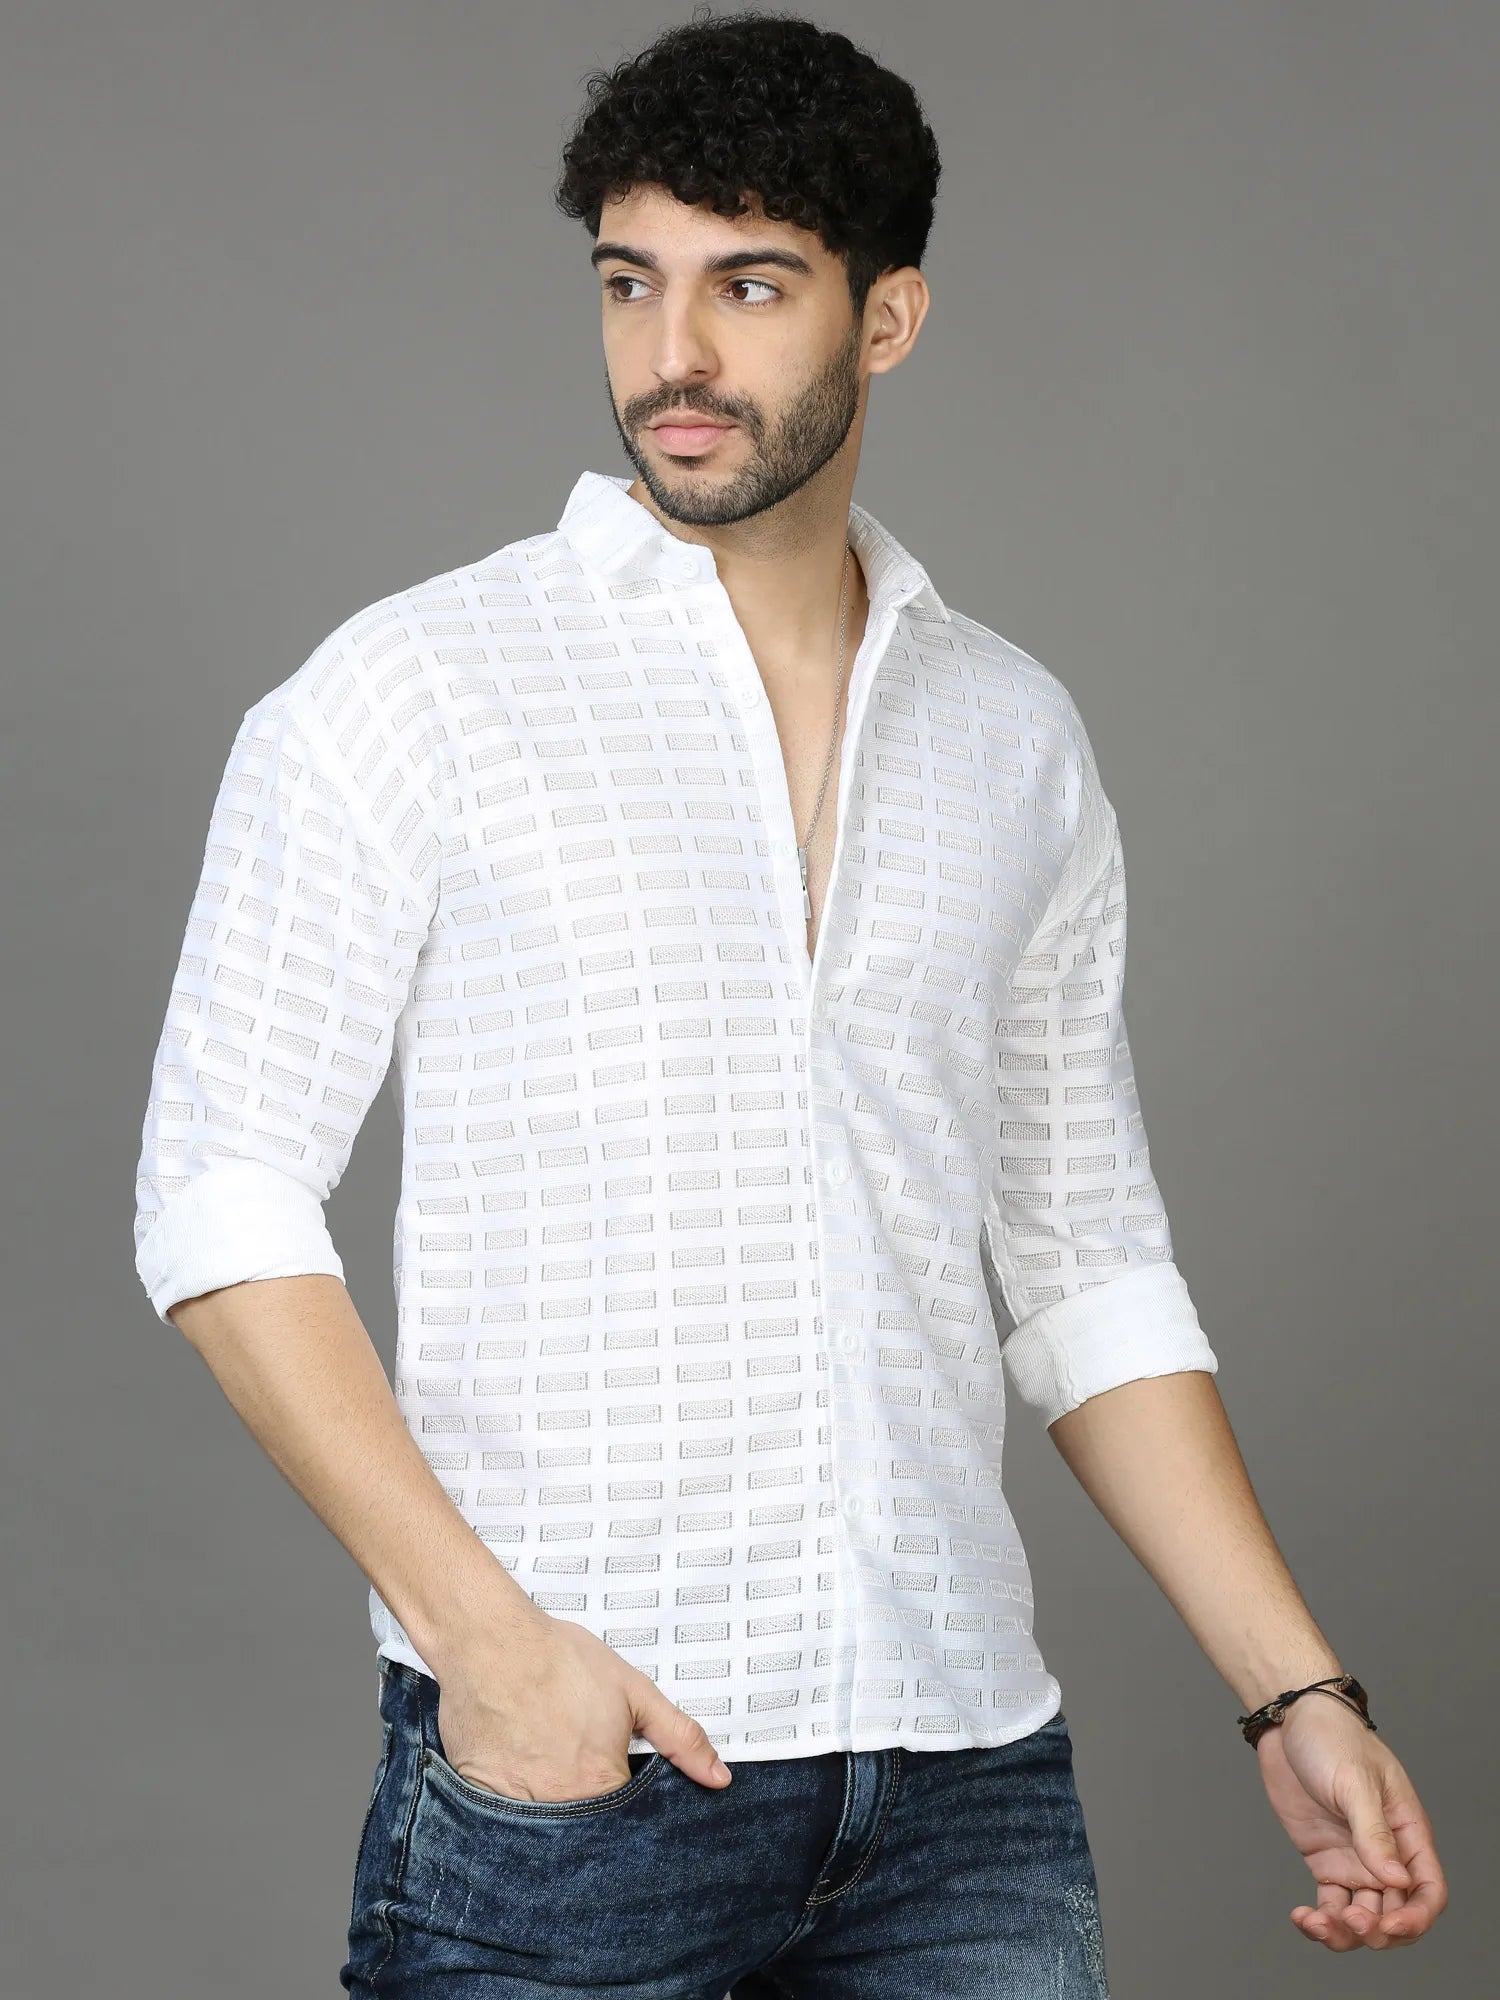 Sophisticated White Down Shoulder Shirt for Men 